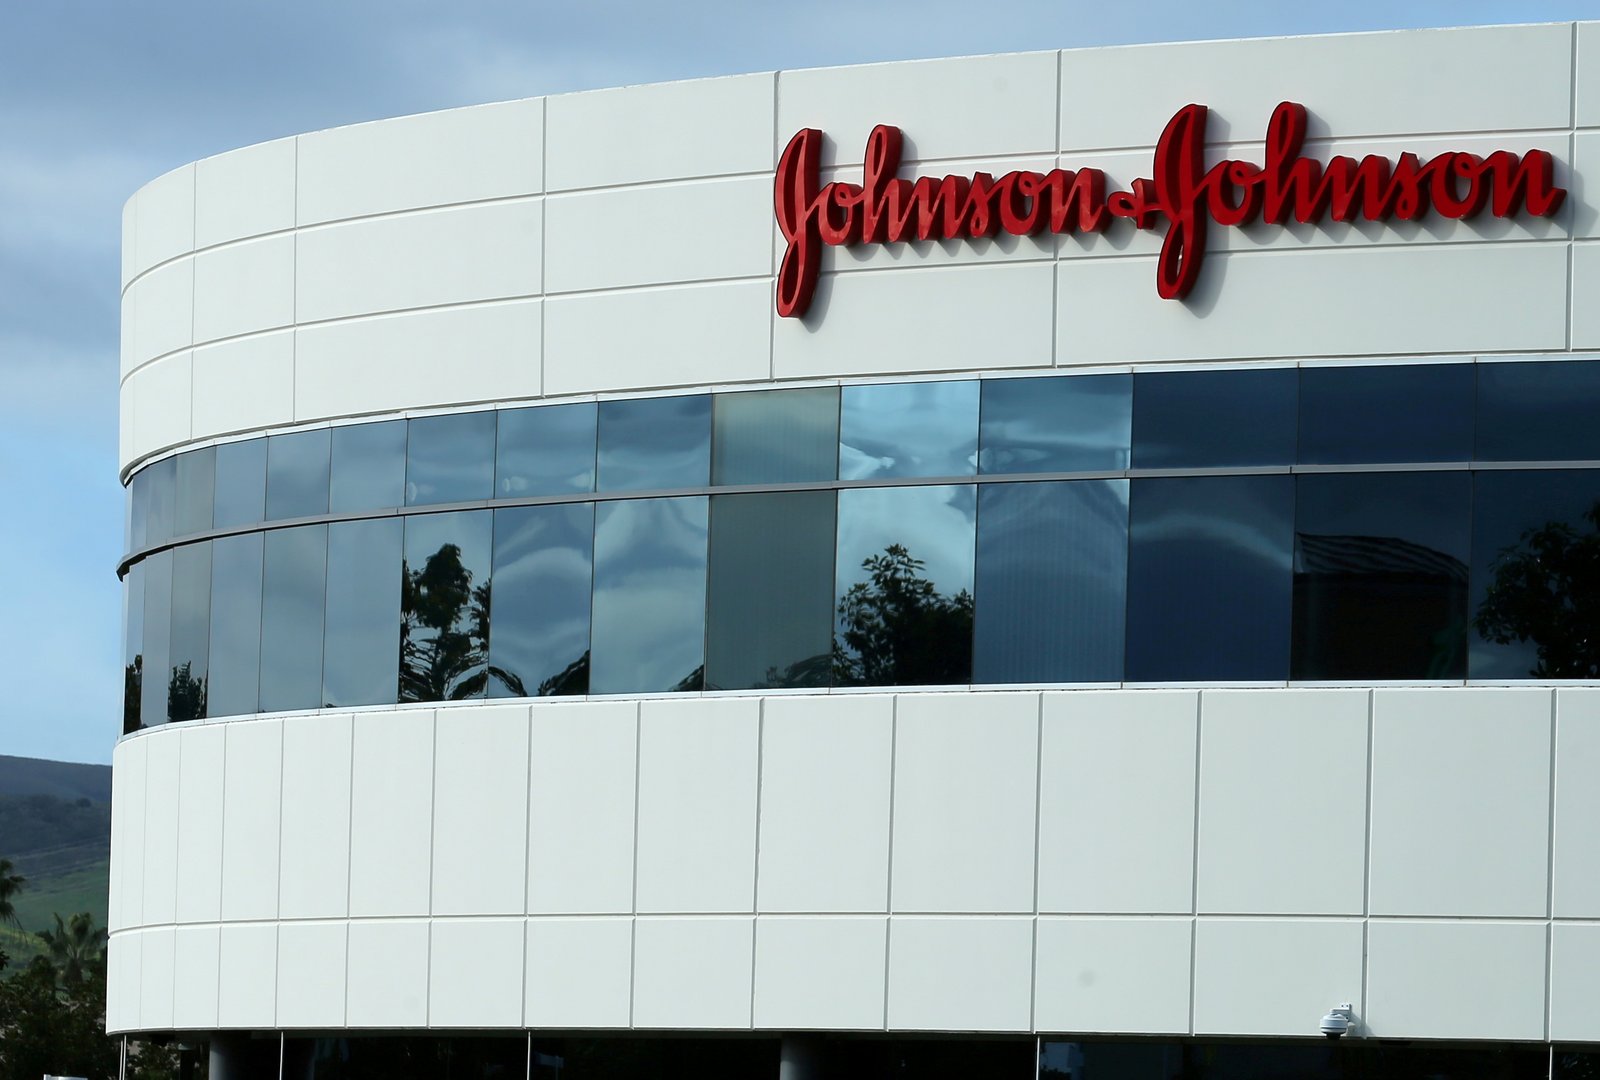 Cancer victims sue Johnson & Johnson over ‘fraudulent’ bankruptcies